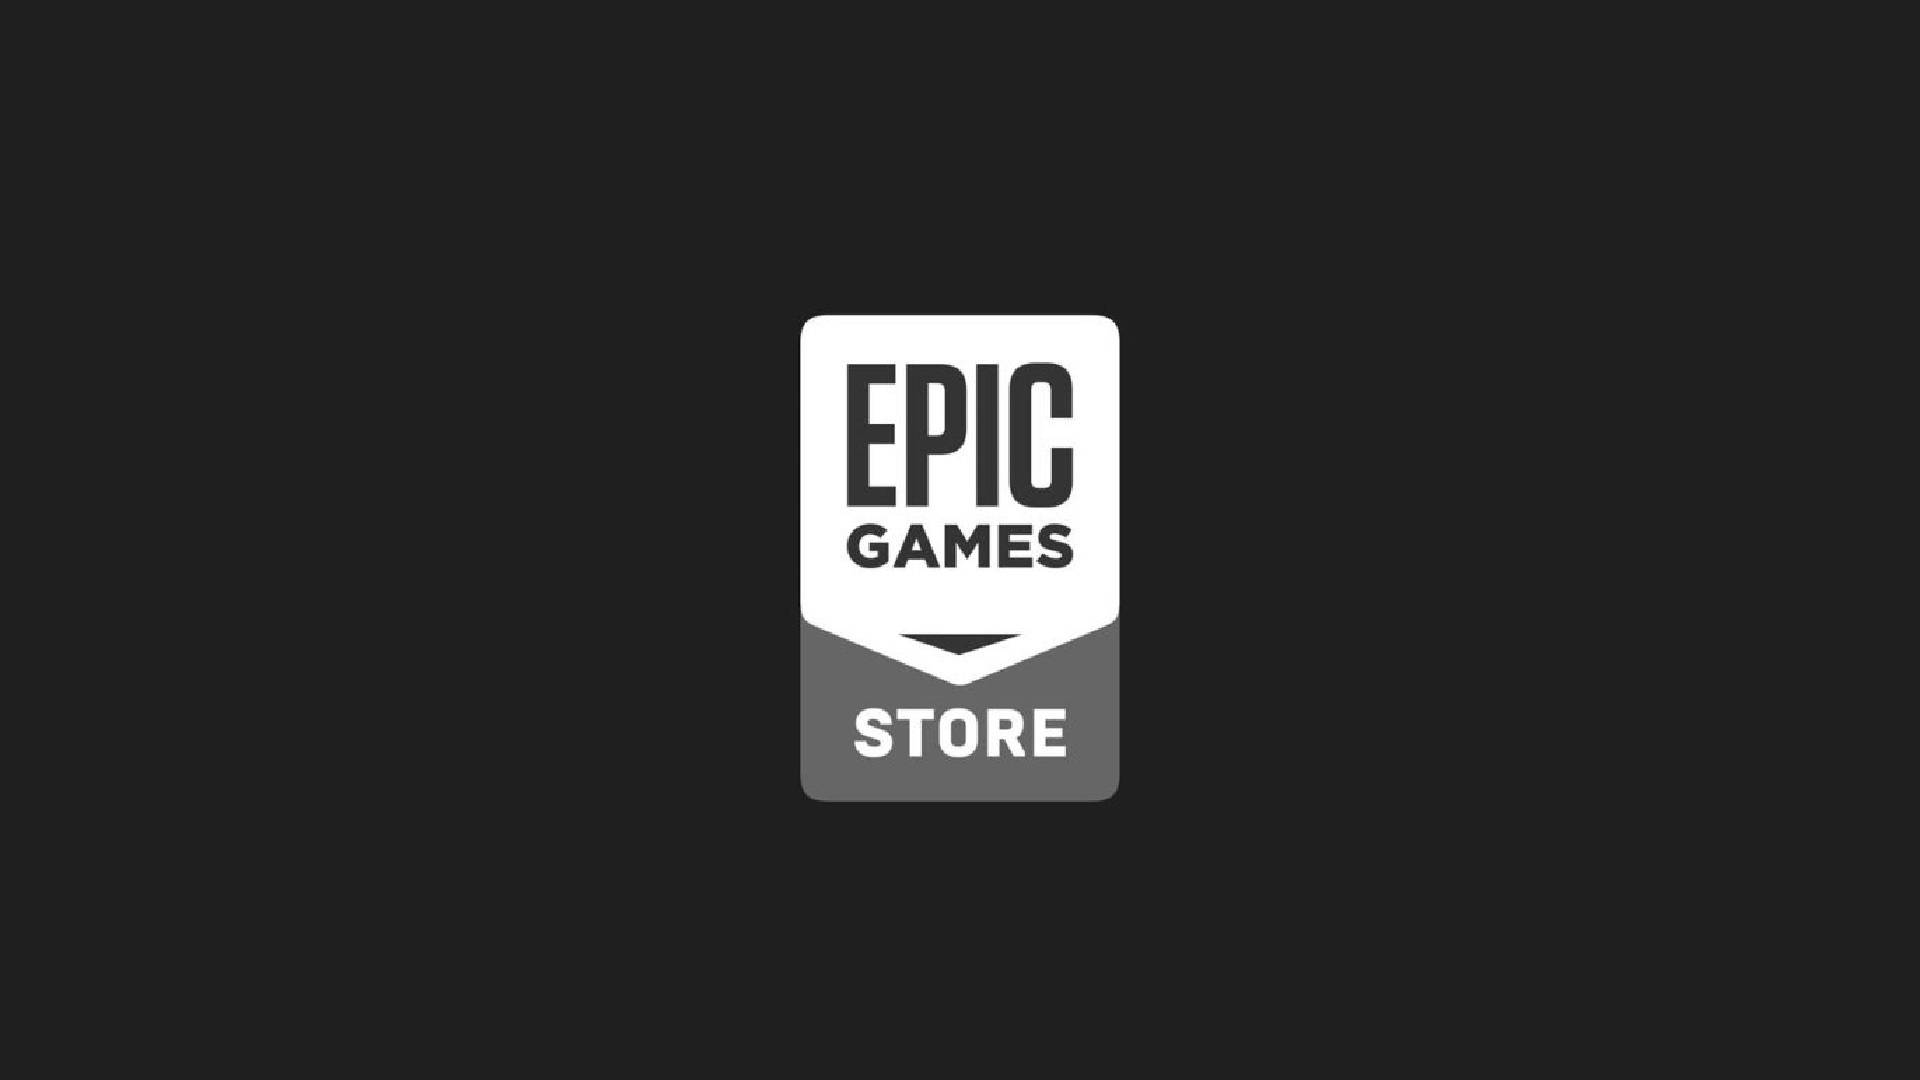 Epic games Store killing floor 2